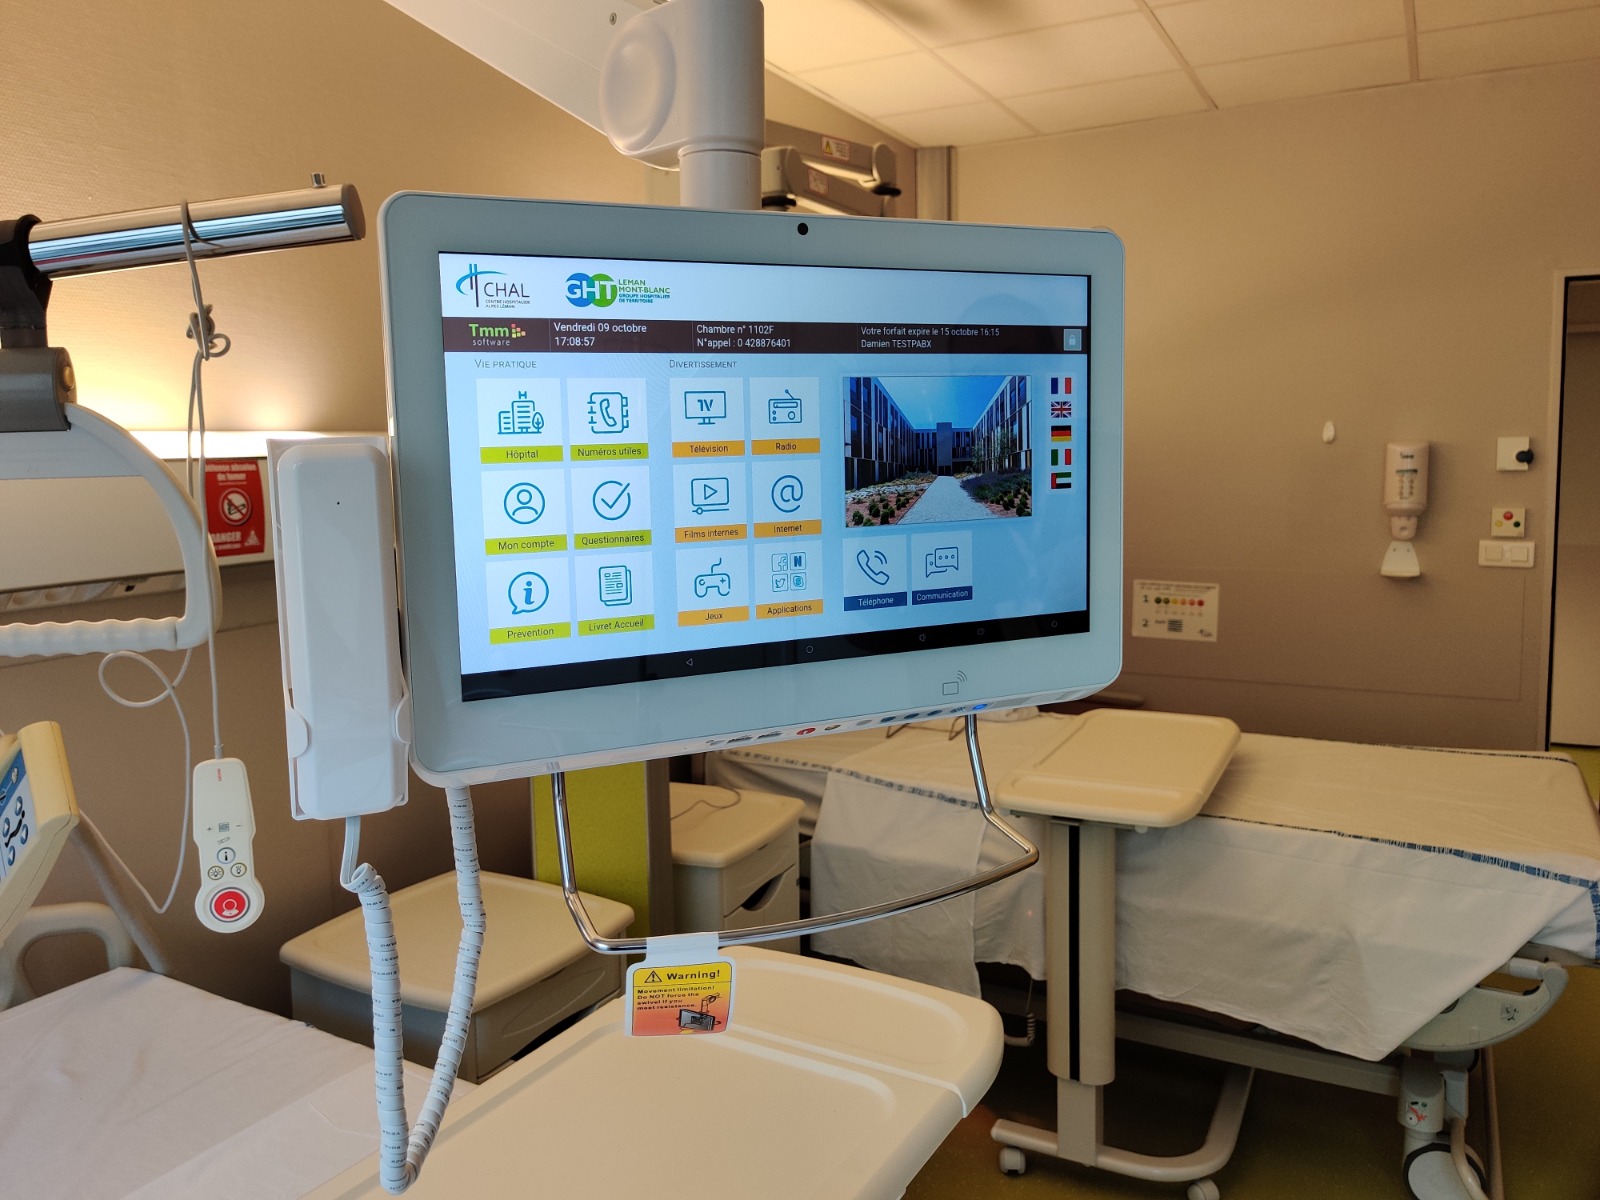 TMM 工业平板电脑厂家解决方案部署在CHAL医院和法国其他两家医院，为患者提供娱乐和信息